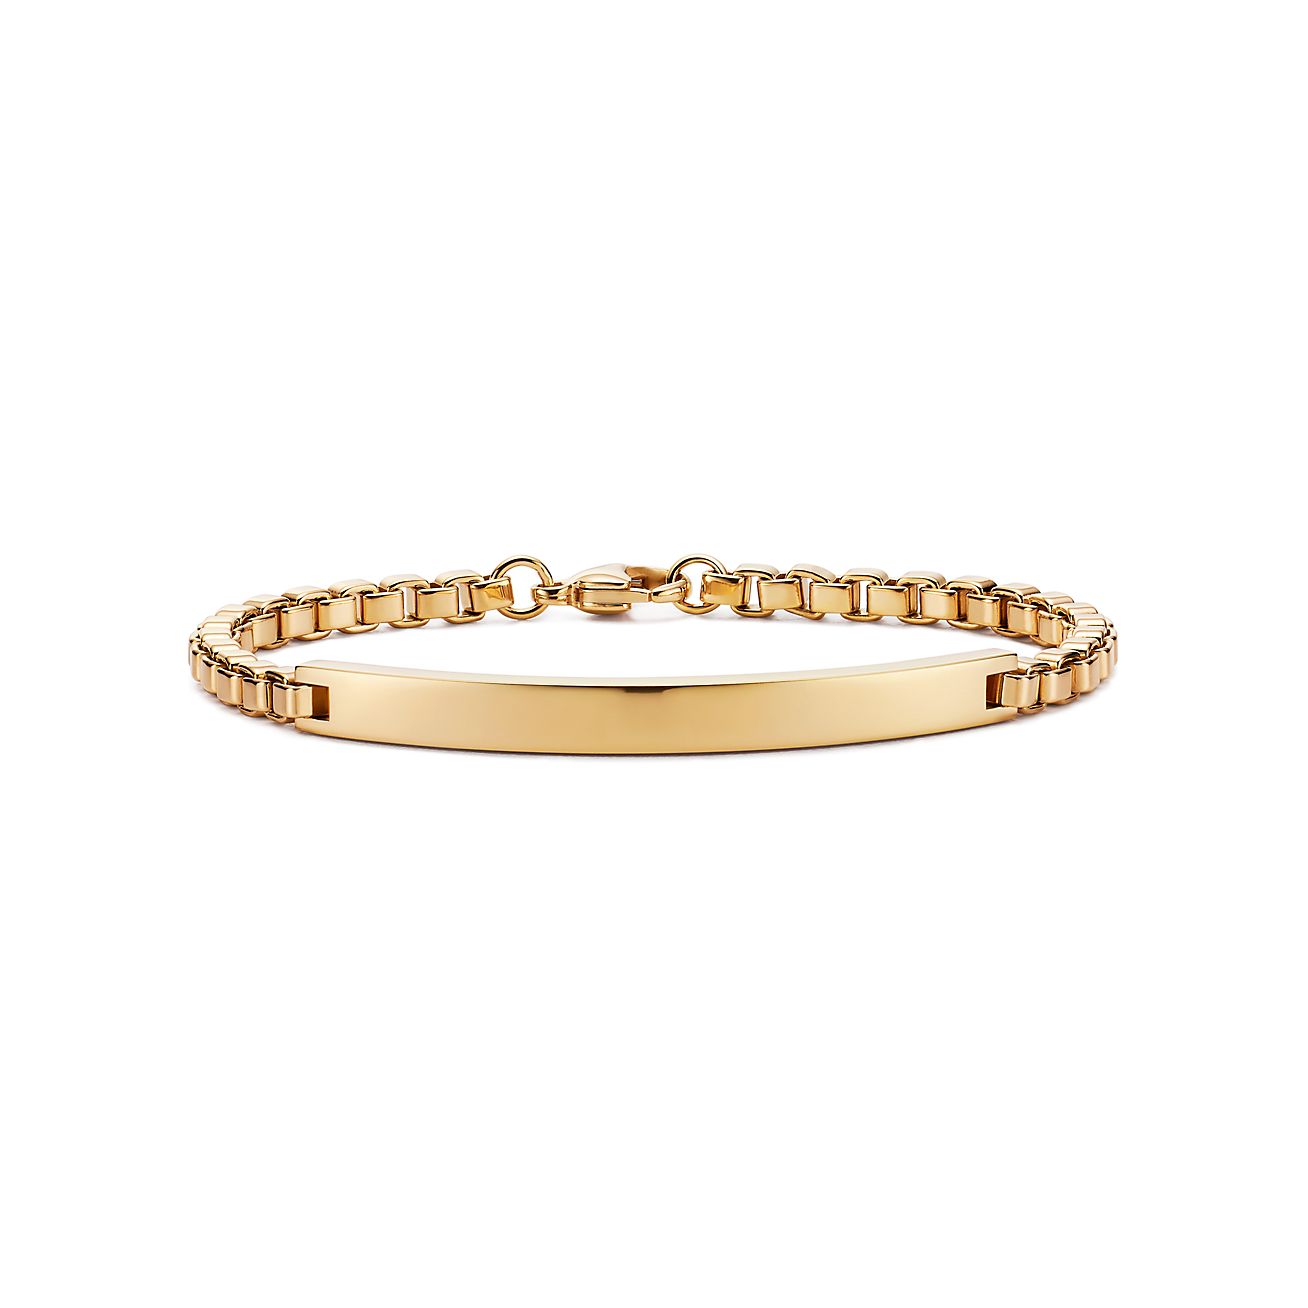 Venetian link I.D. bracelet in 18k gold 